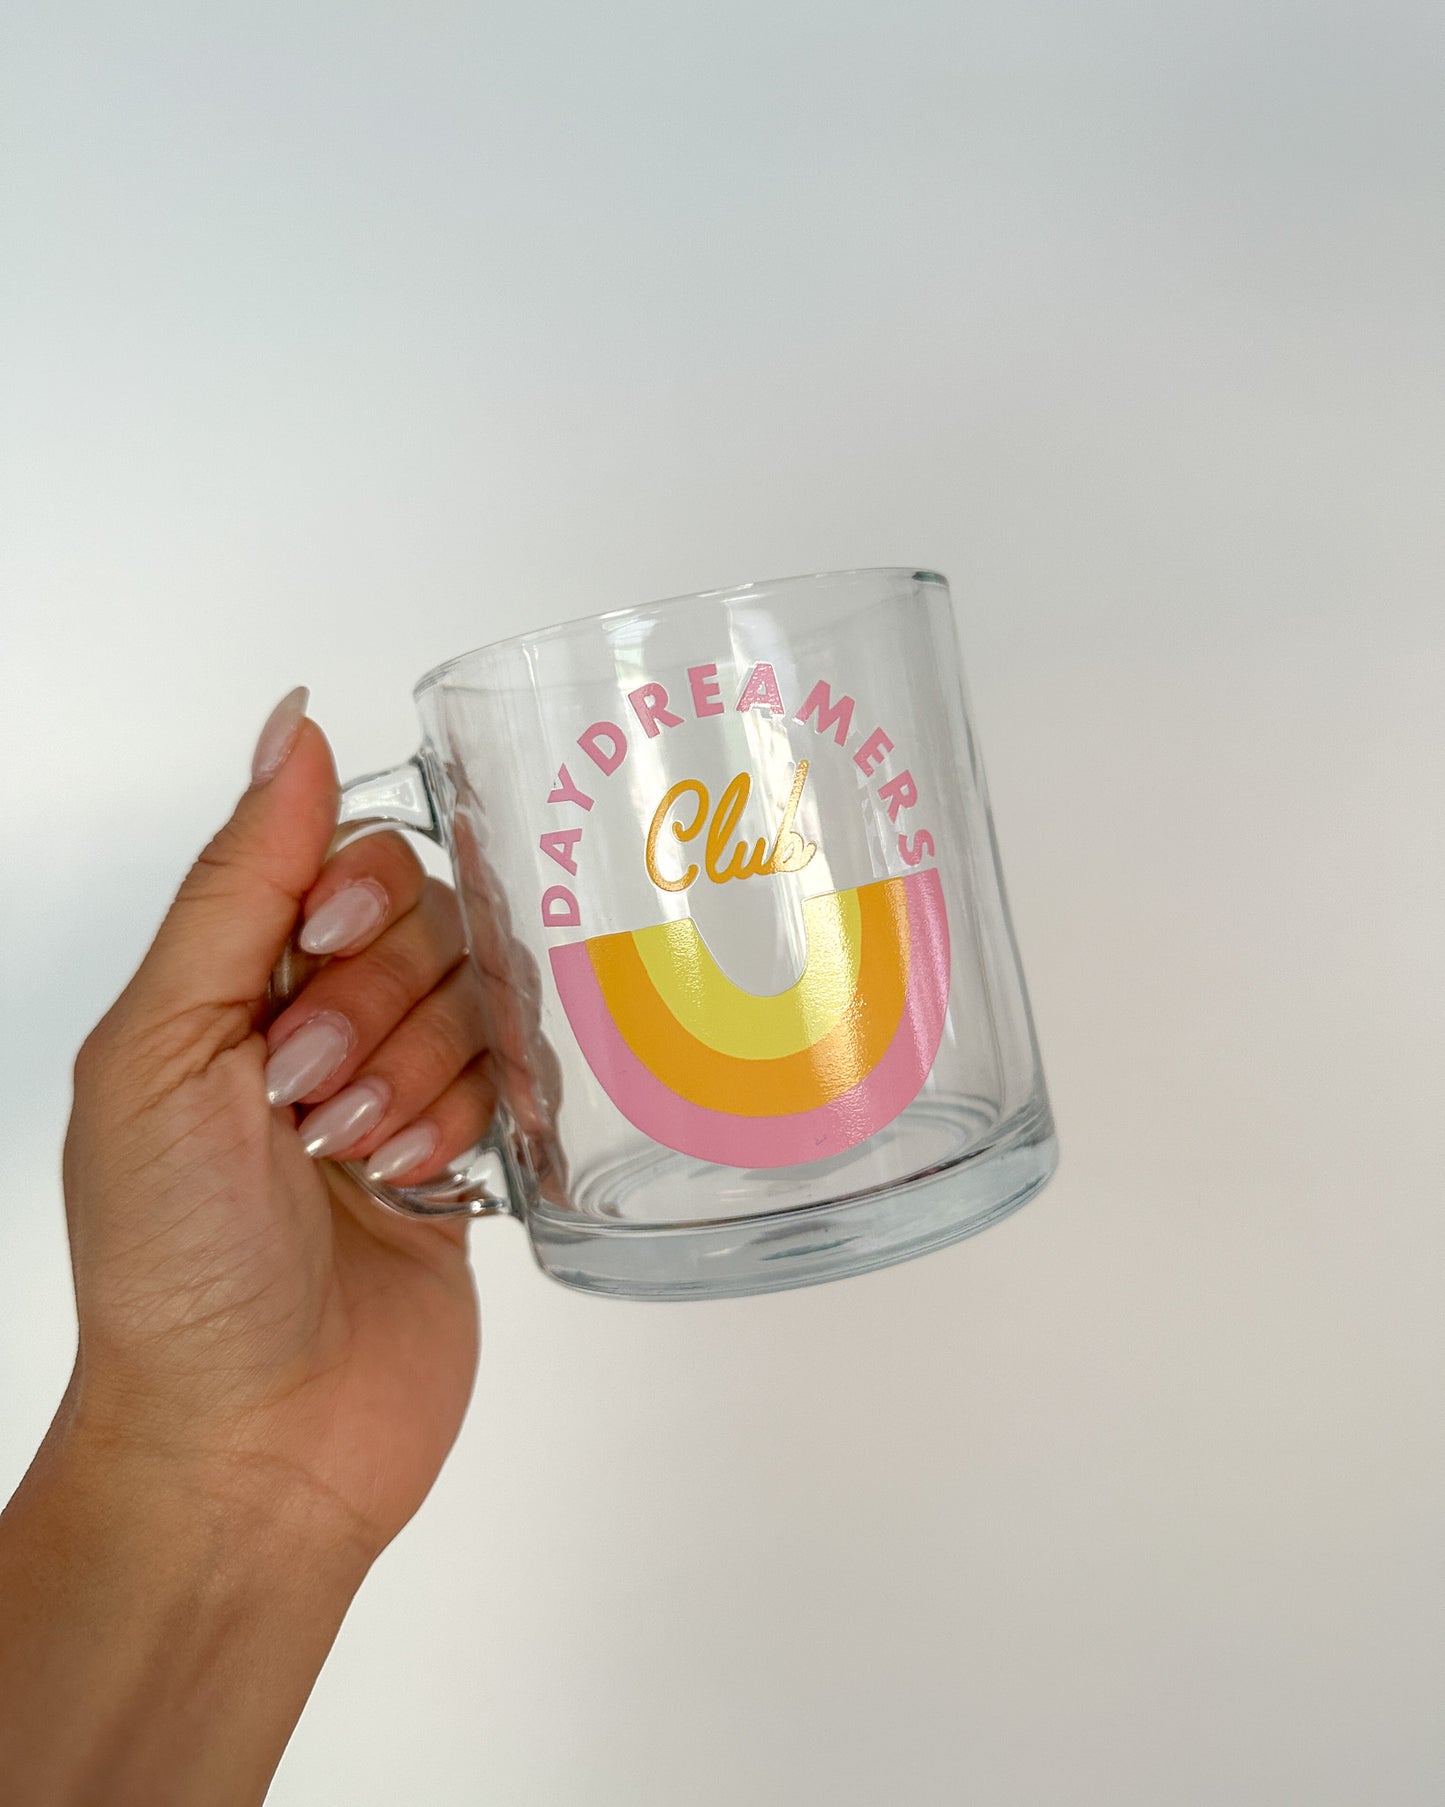 Daydreamer Glass Mug